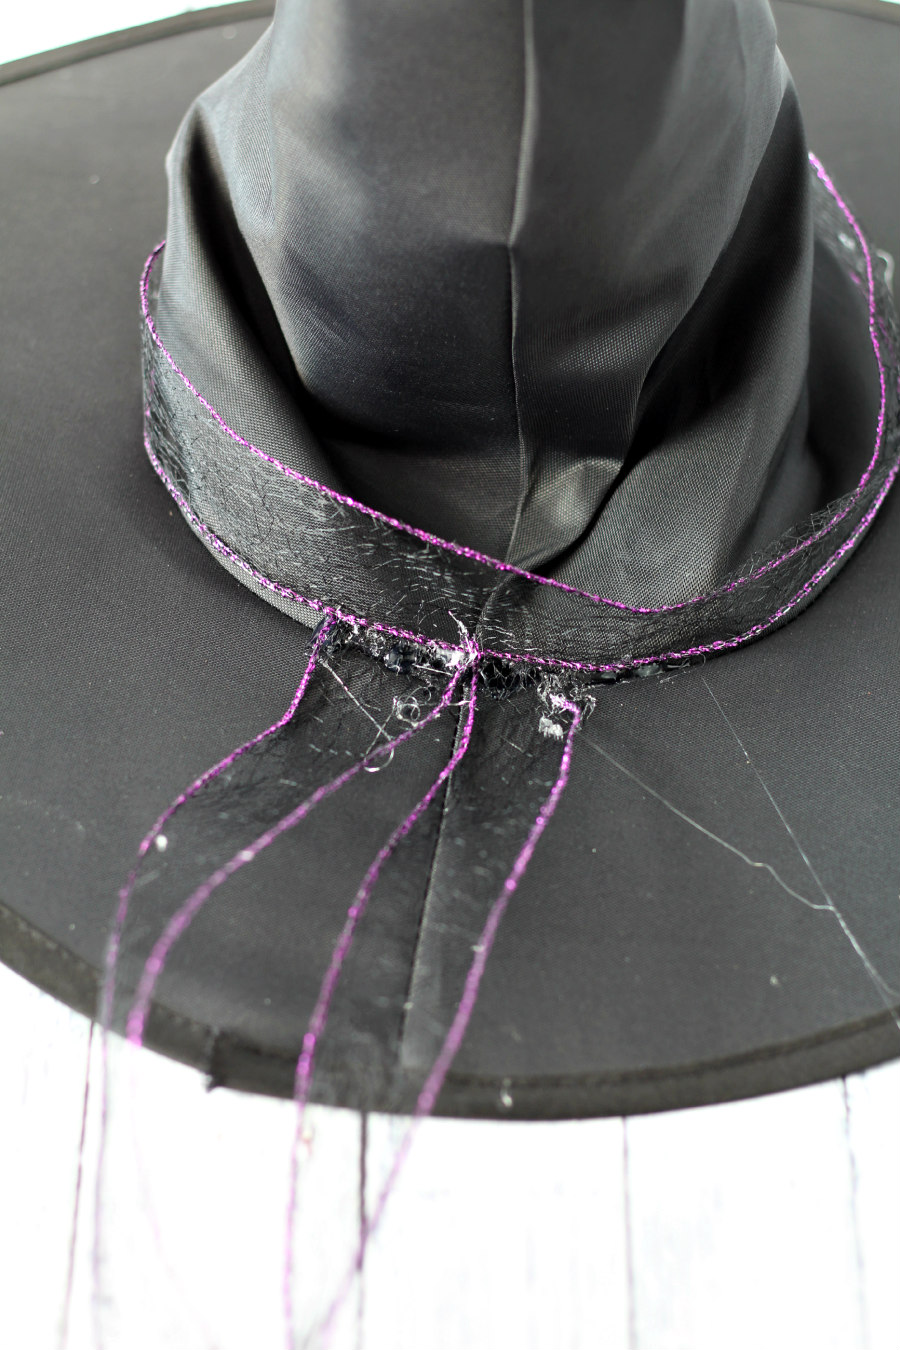 Purple trimmed black ribbon hot glued around witch hat.